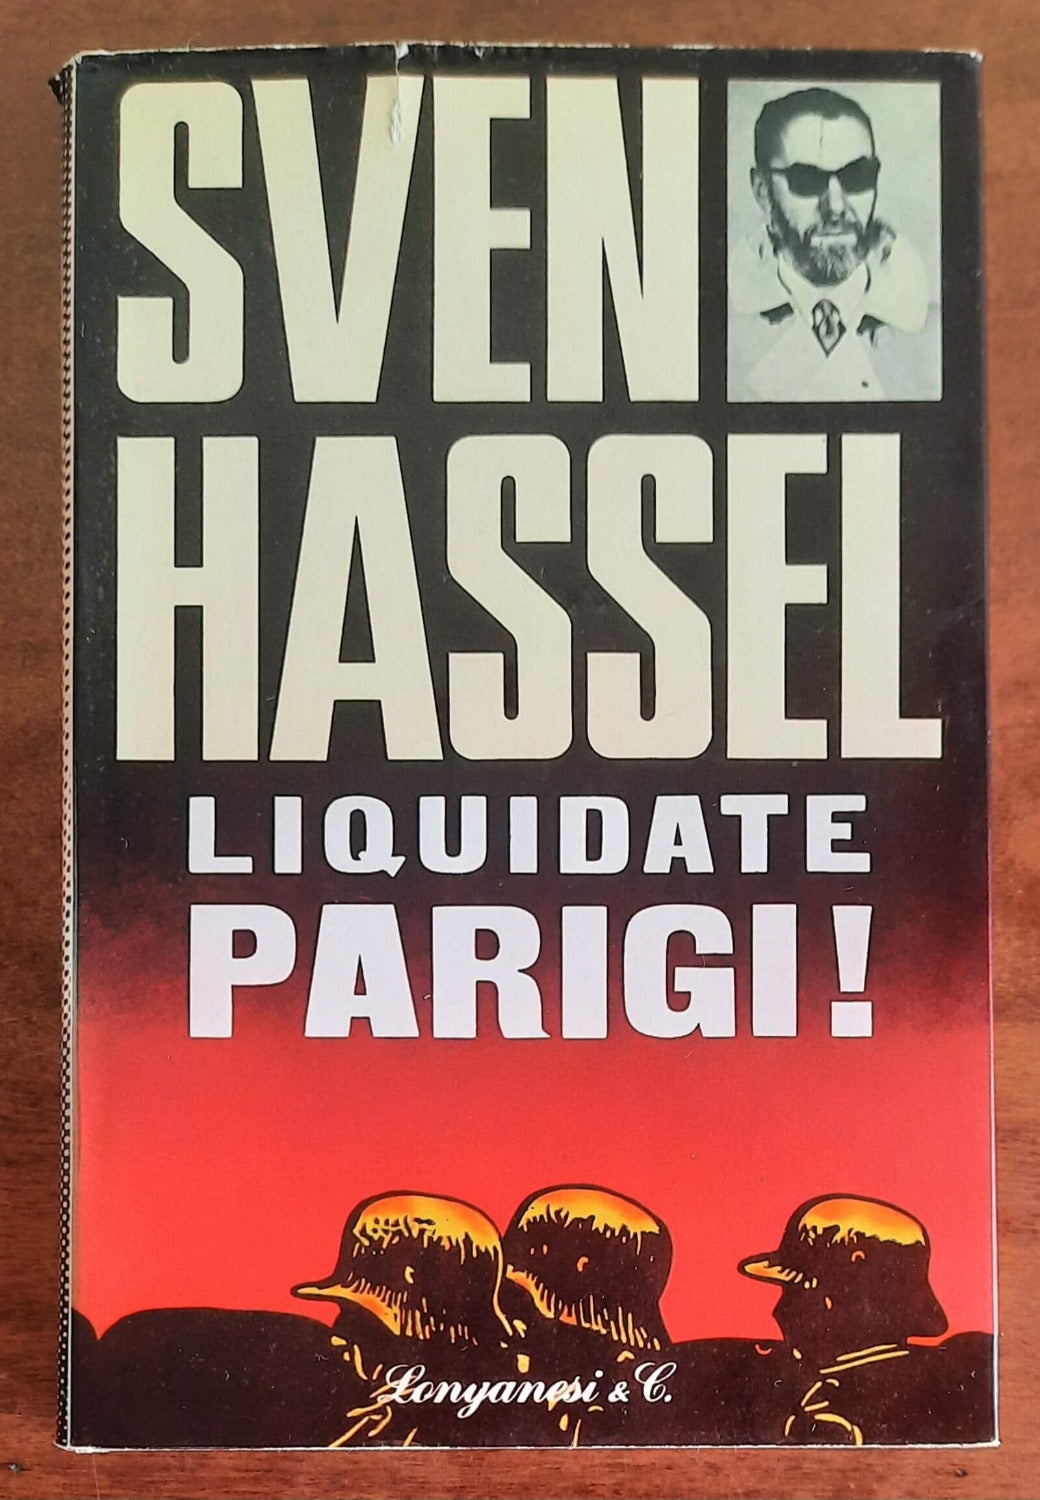 Liquidate Parigi! di Sven Hassel - Longanesi